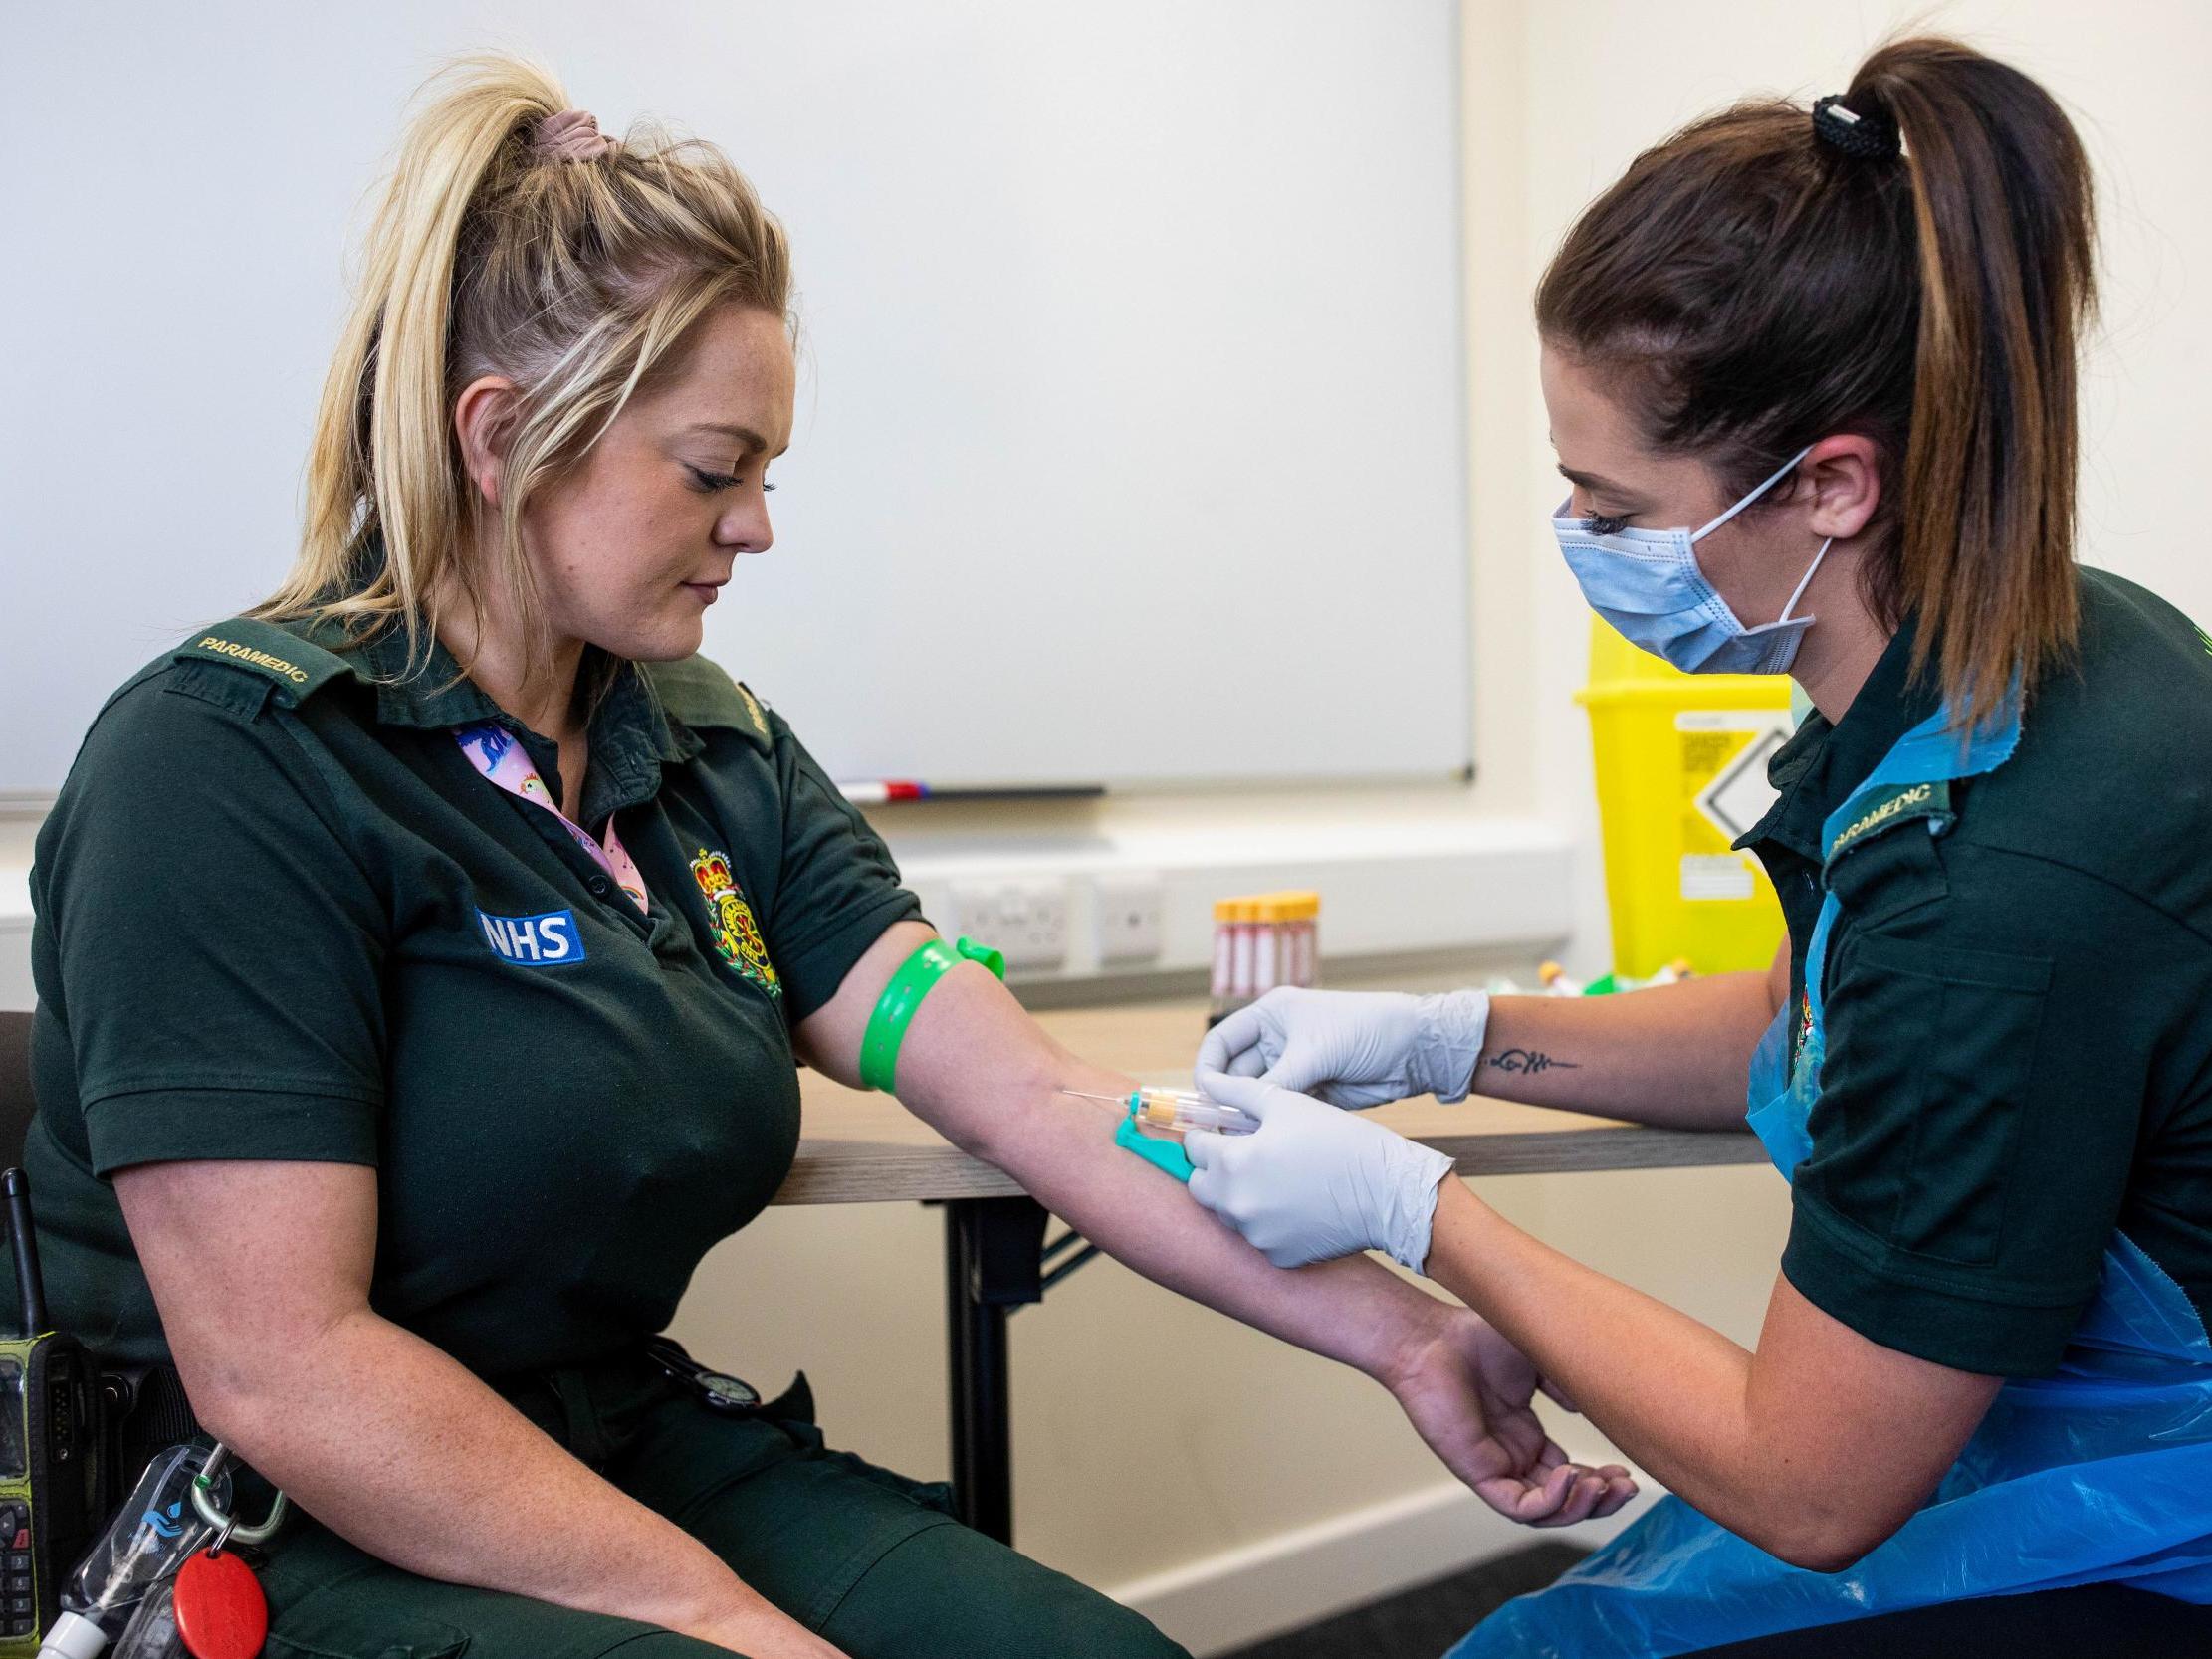 Blood sample taken during antibody testing program at West Midlands Ambulance Service on 5 June